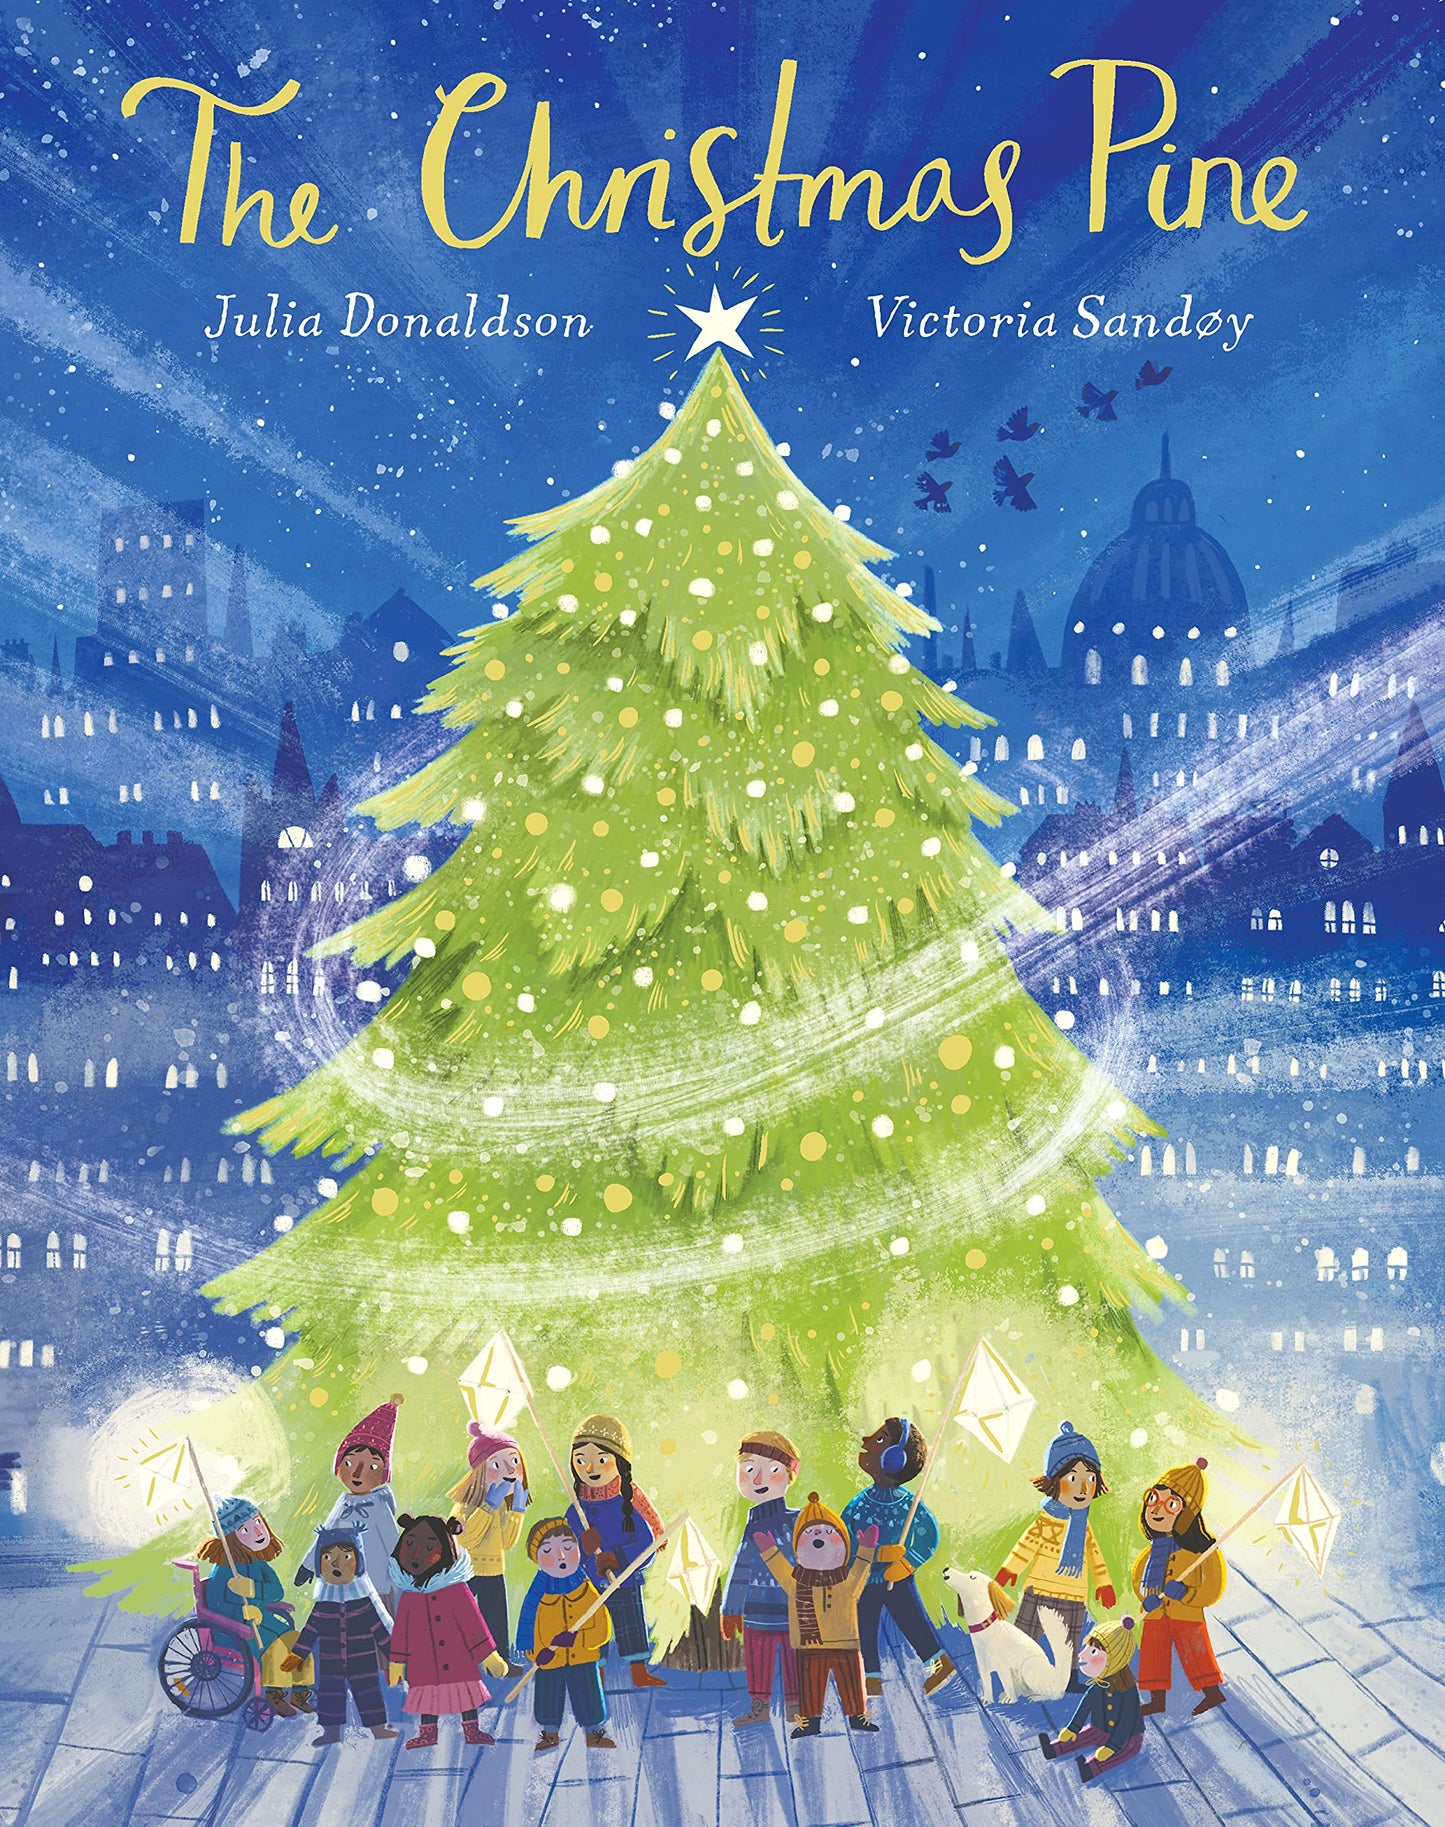 The Christmas Pine by Julia Donaldson (author), Victoria Sandøy (illustrator)